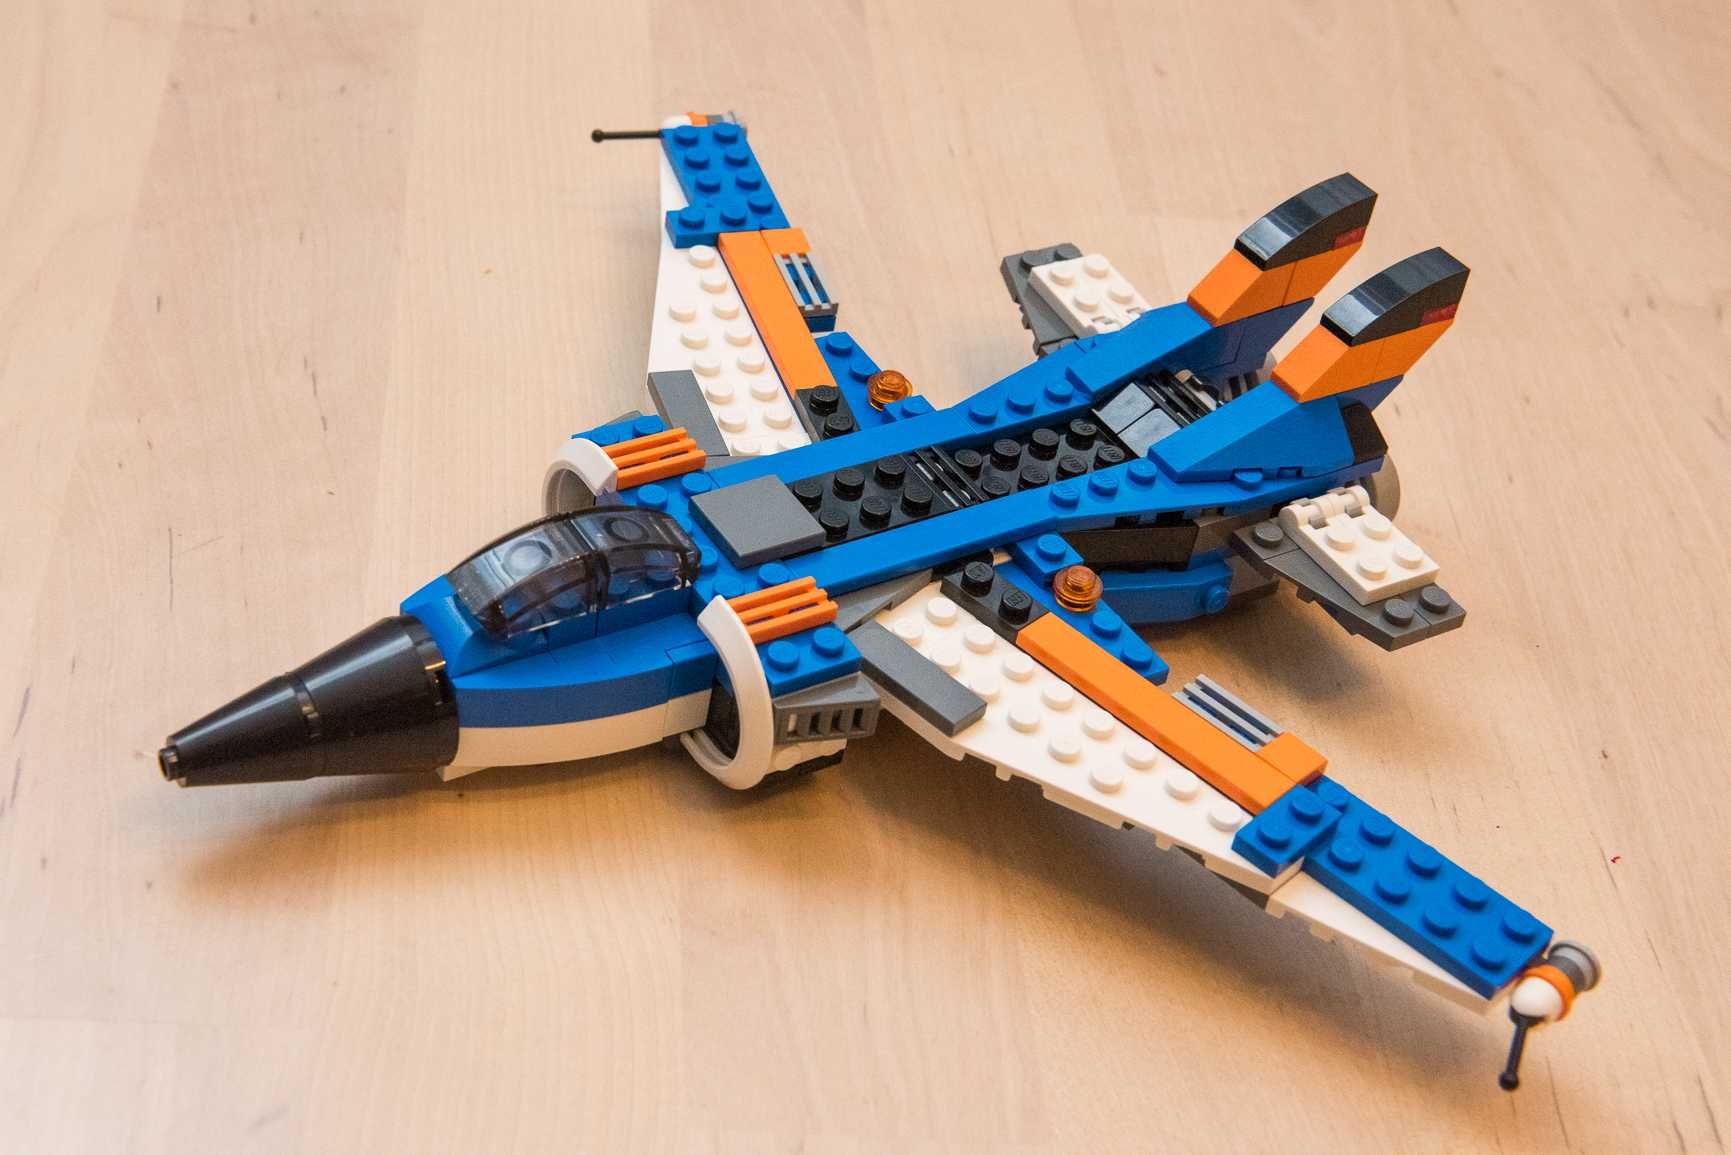 Set Lego Creator 3in1 Thunder Wings, Inaripatul Fulgerator, cod 31008